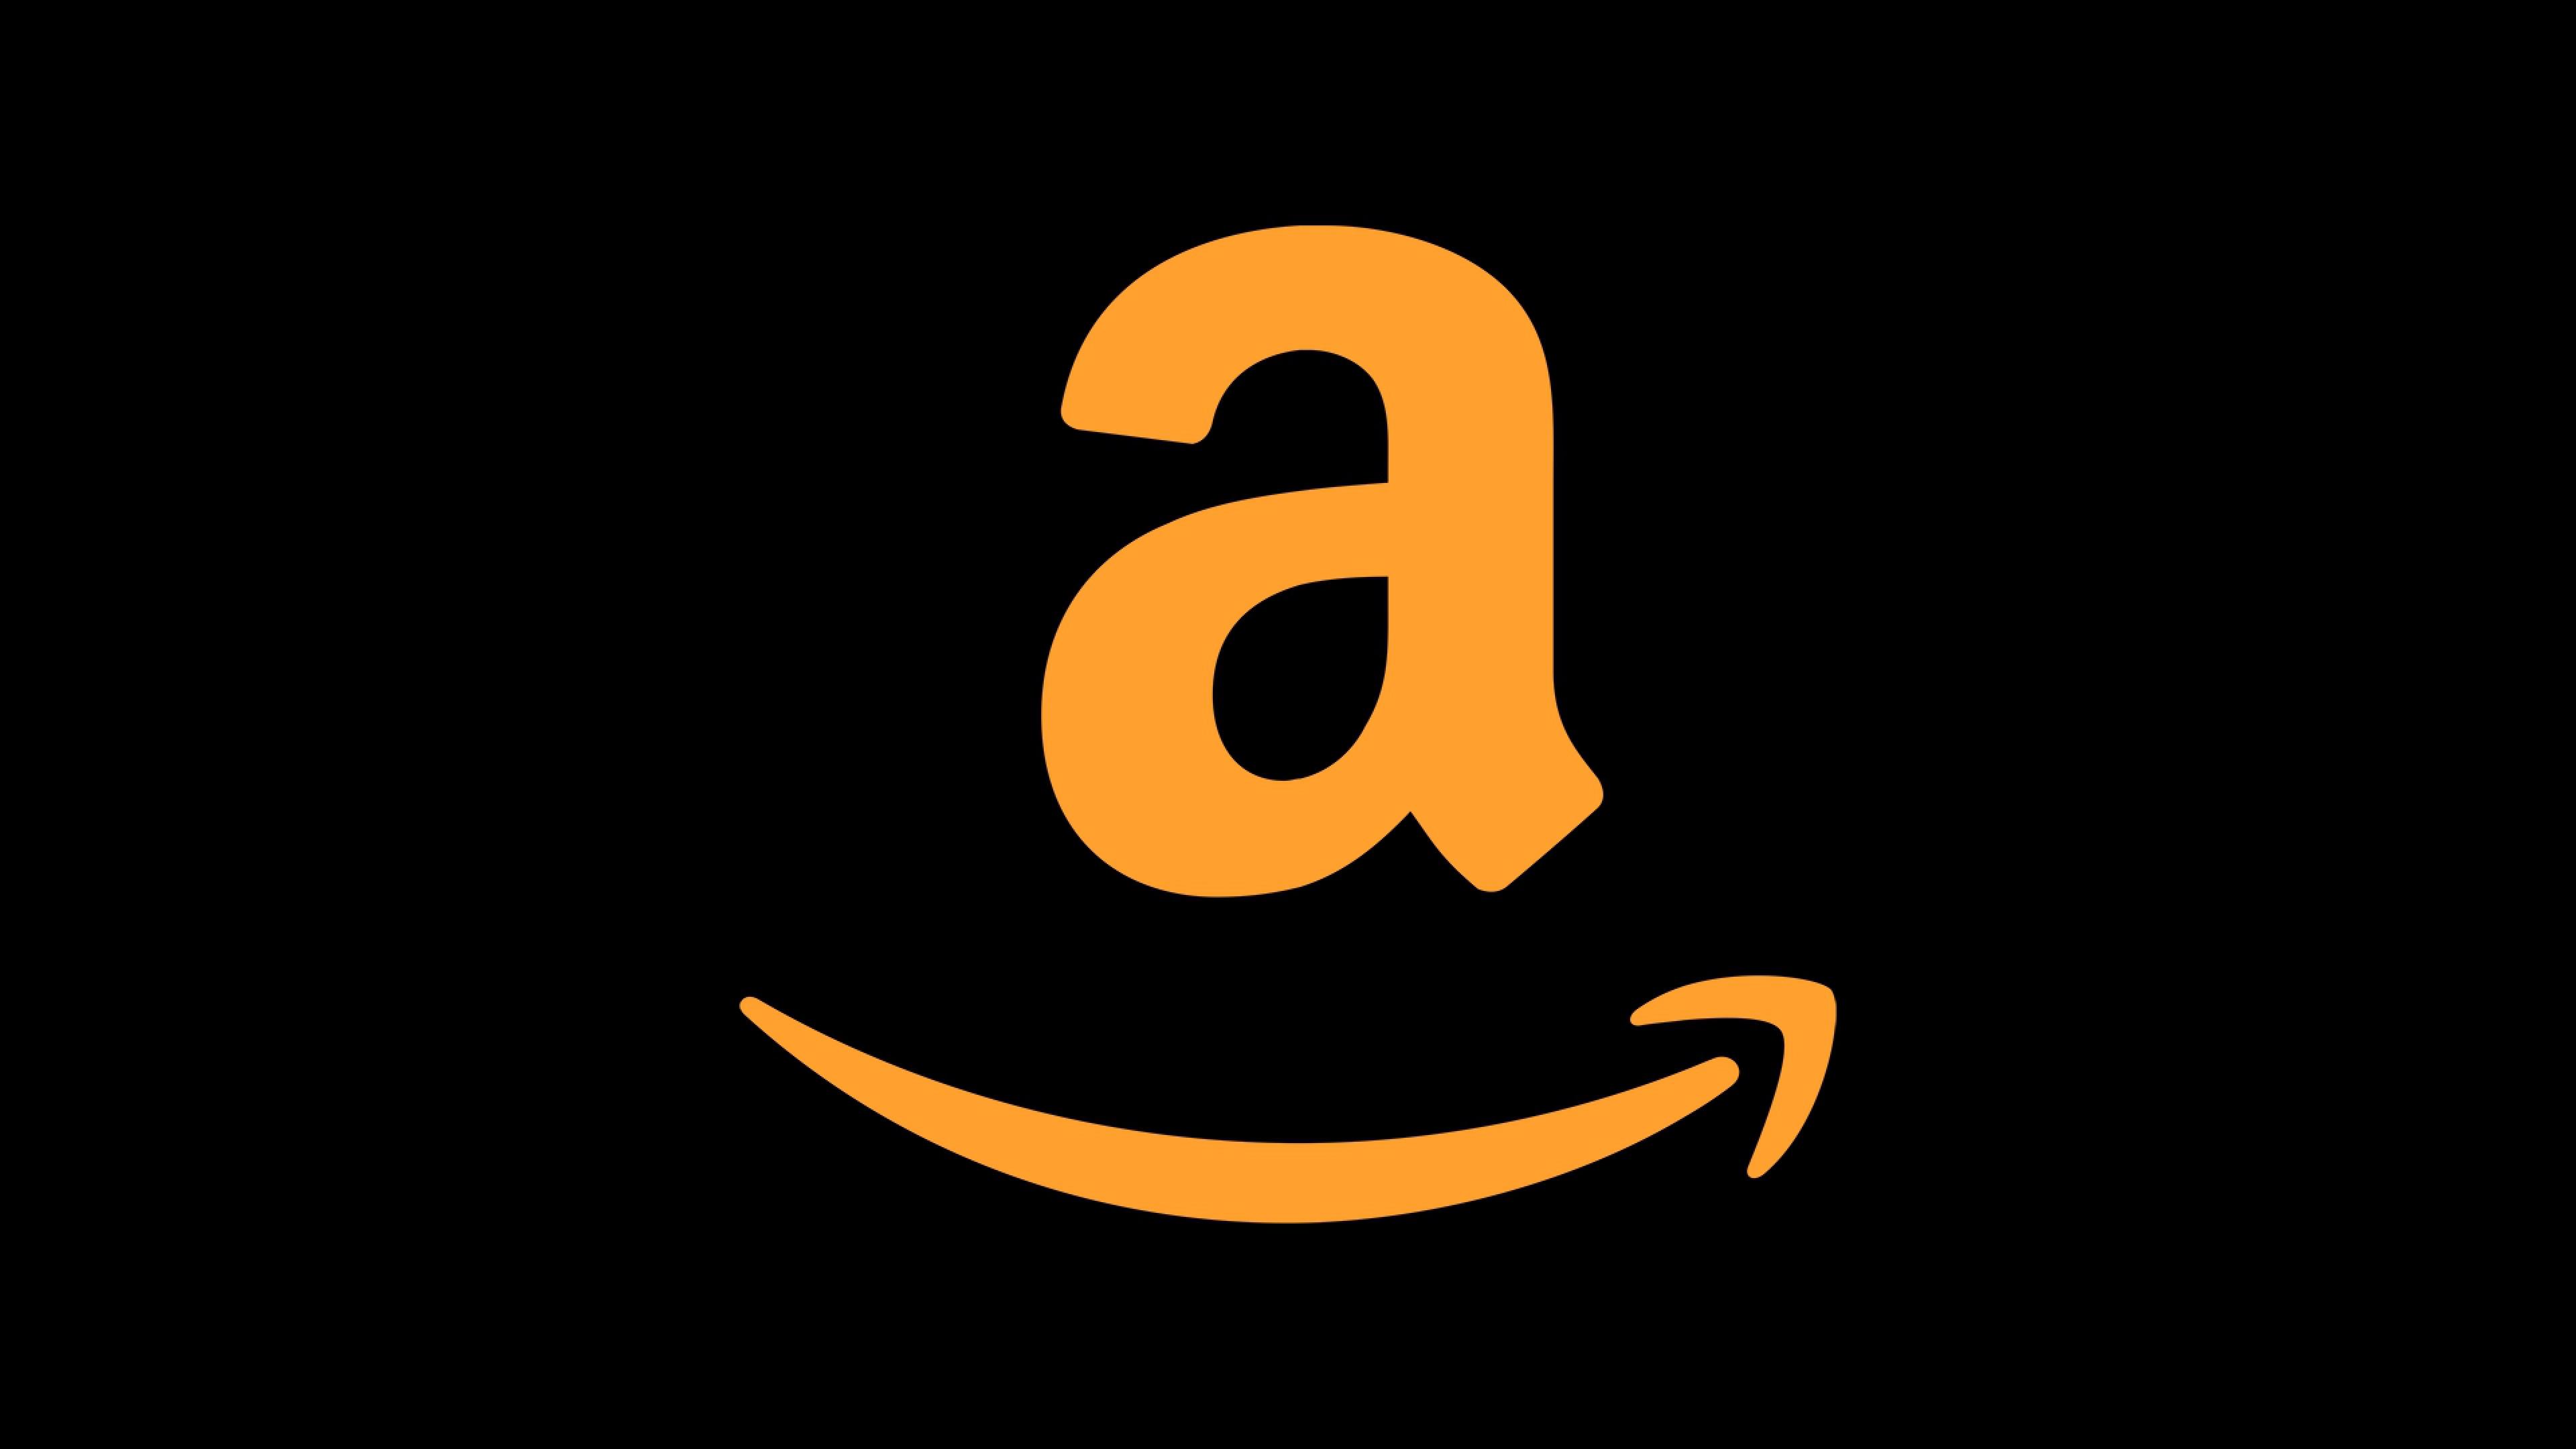 Amazon Logo - Amazon 4k Logo, HD Logo, 4k Wallpapers, Images, Backgrounds, Photos ...